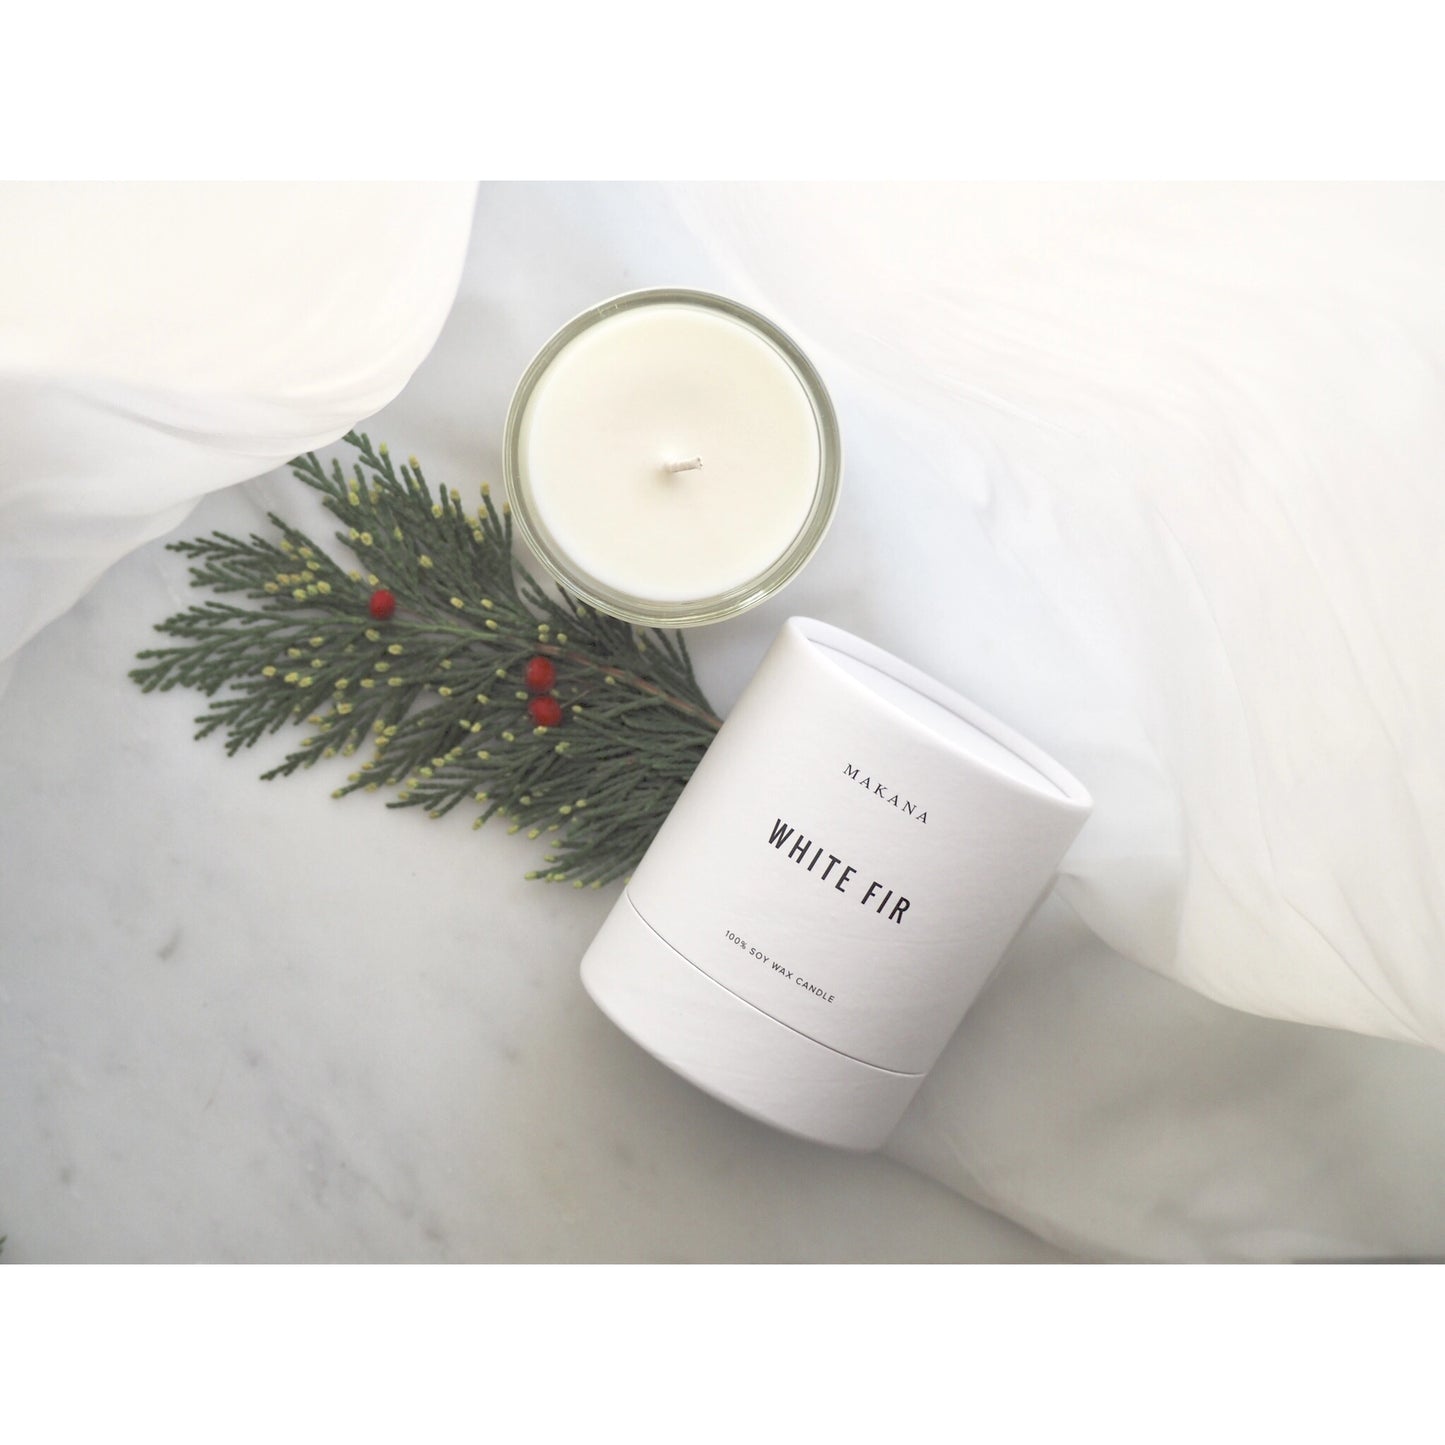 makana / candle - white fir